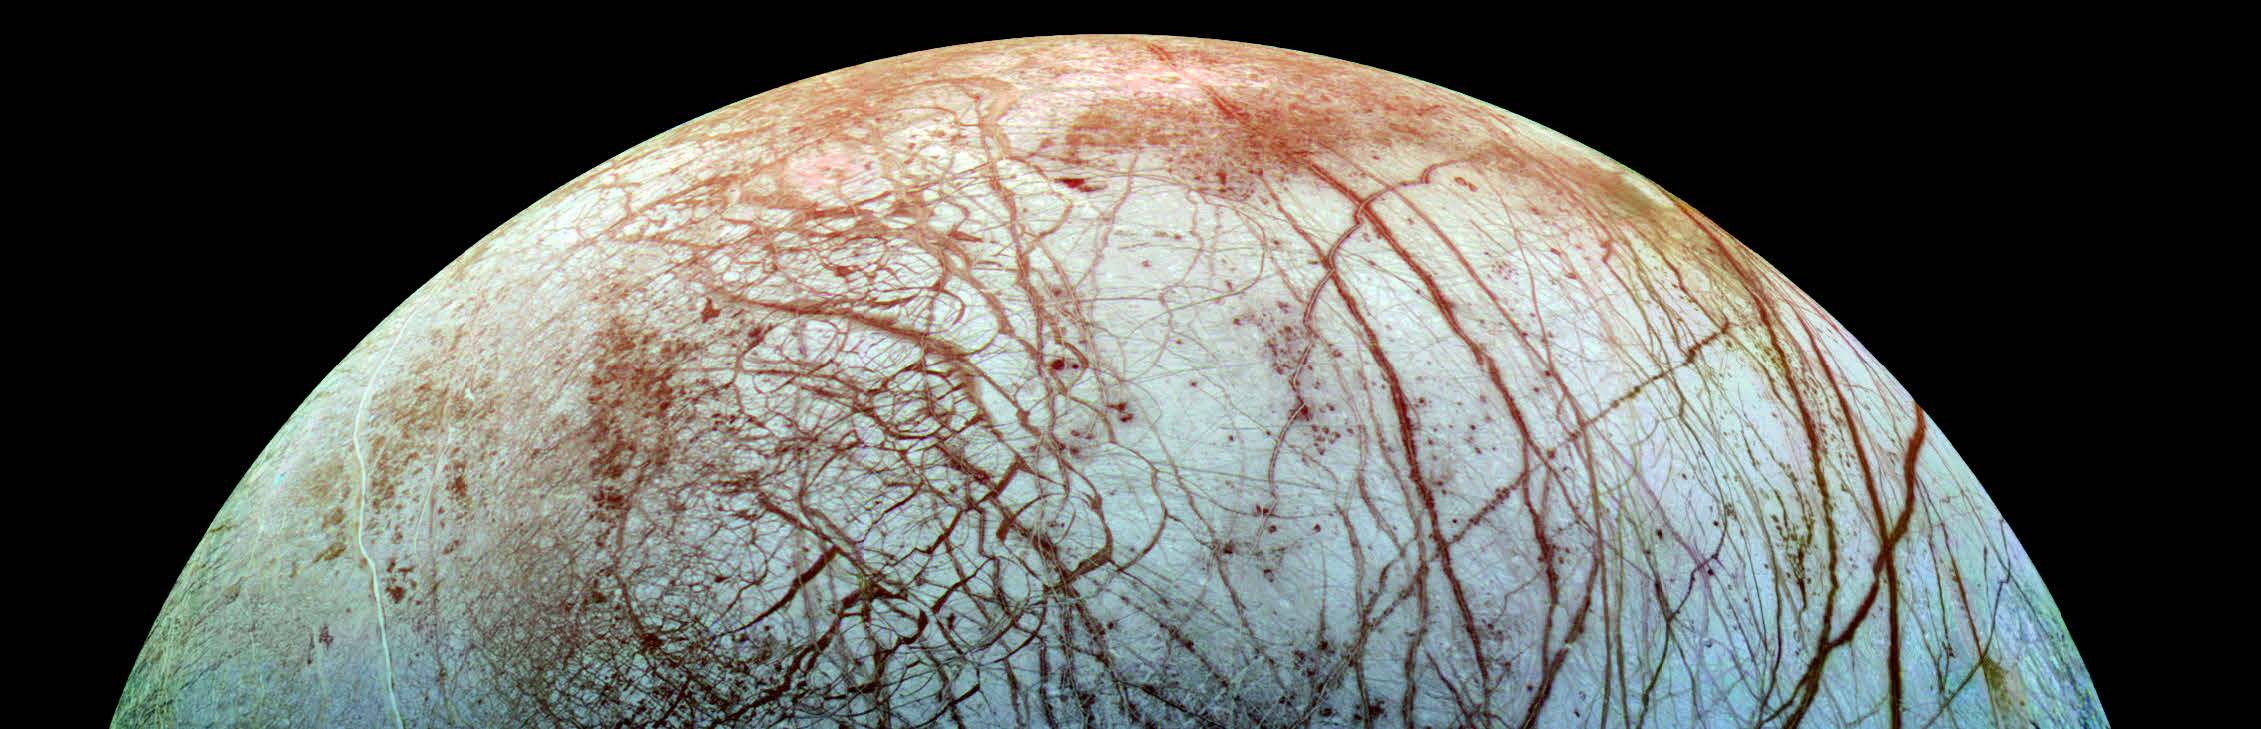 Image of Jupiter's moon Europa